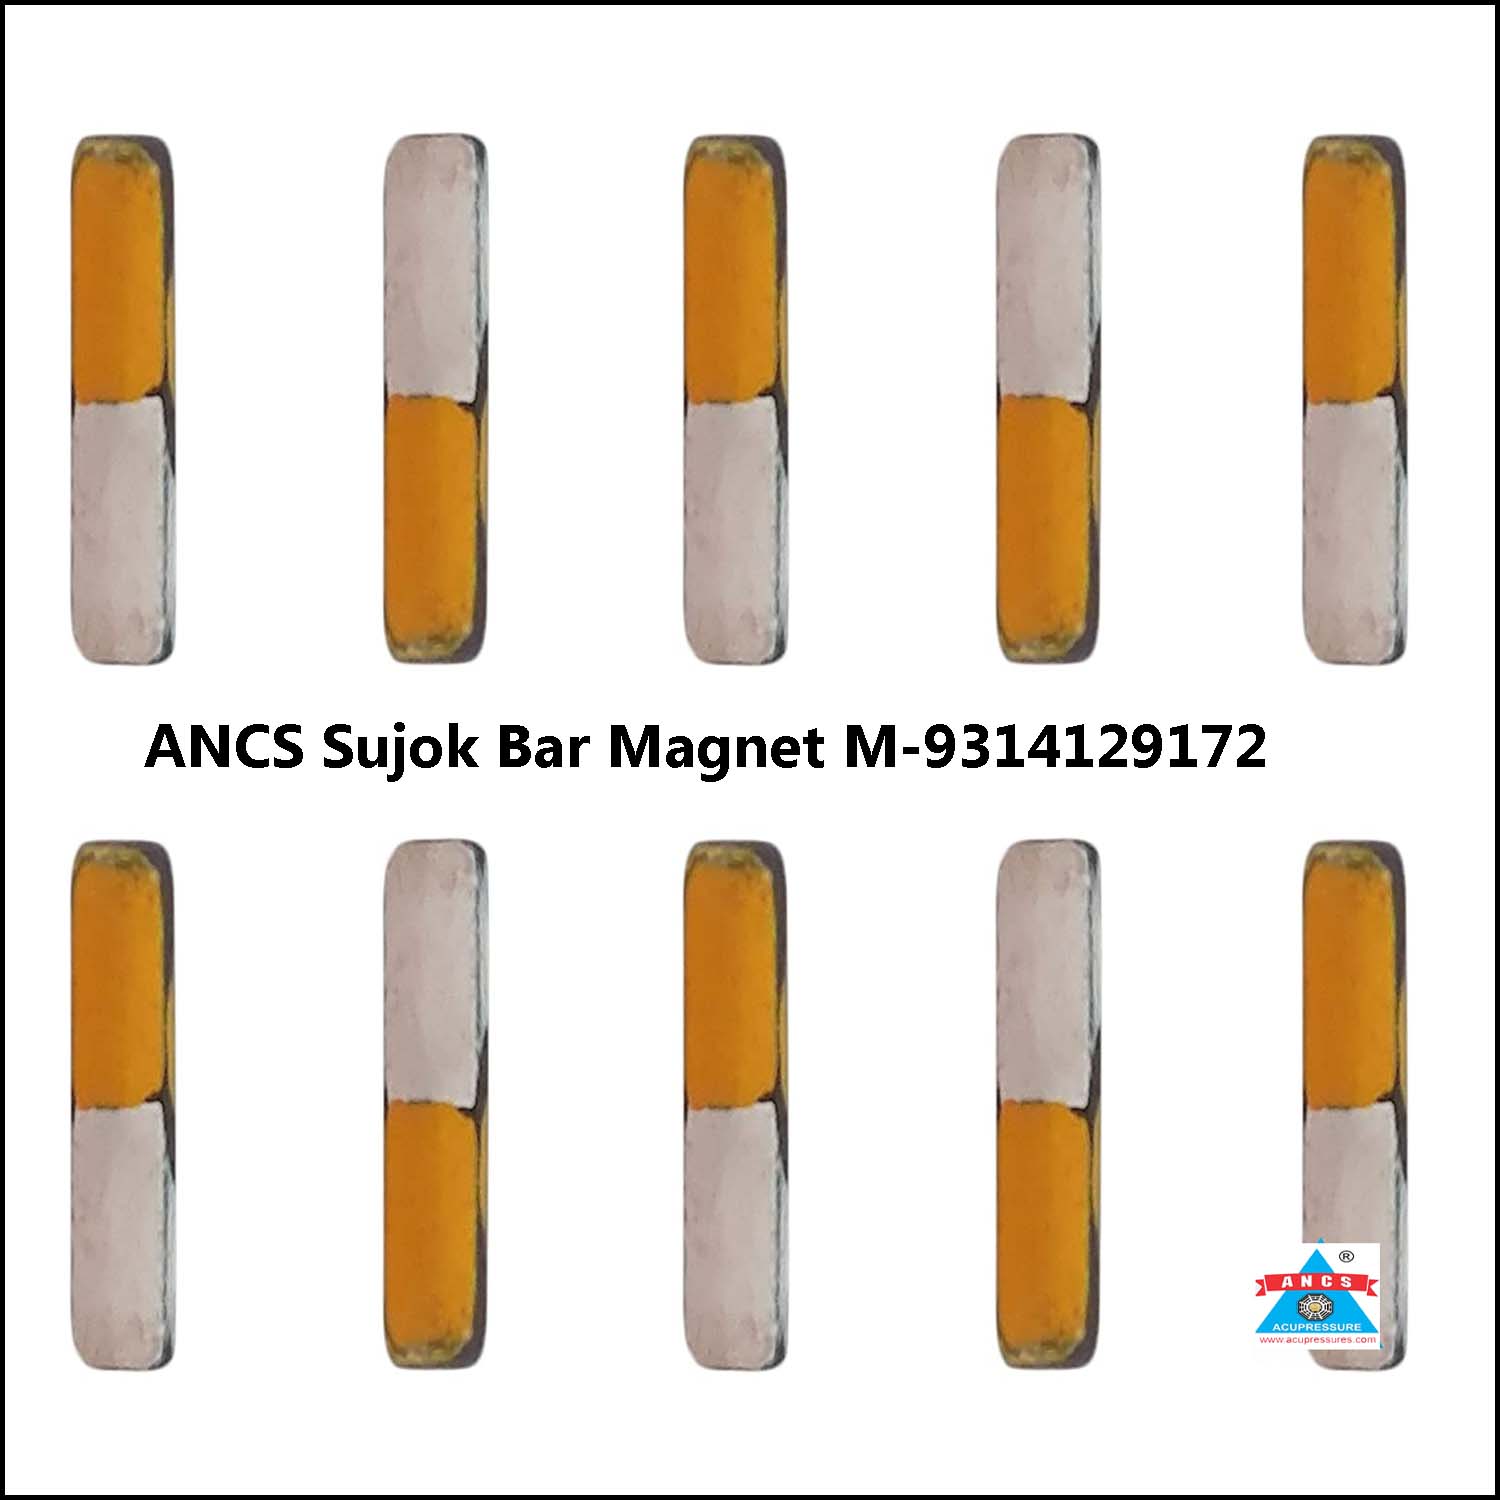 ANCS sujok bar magnet set of 10 